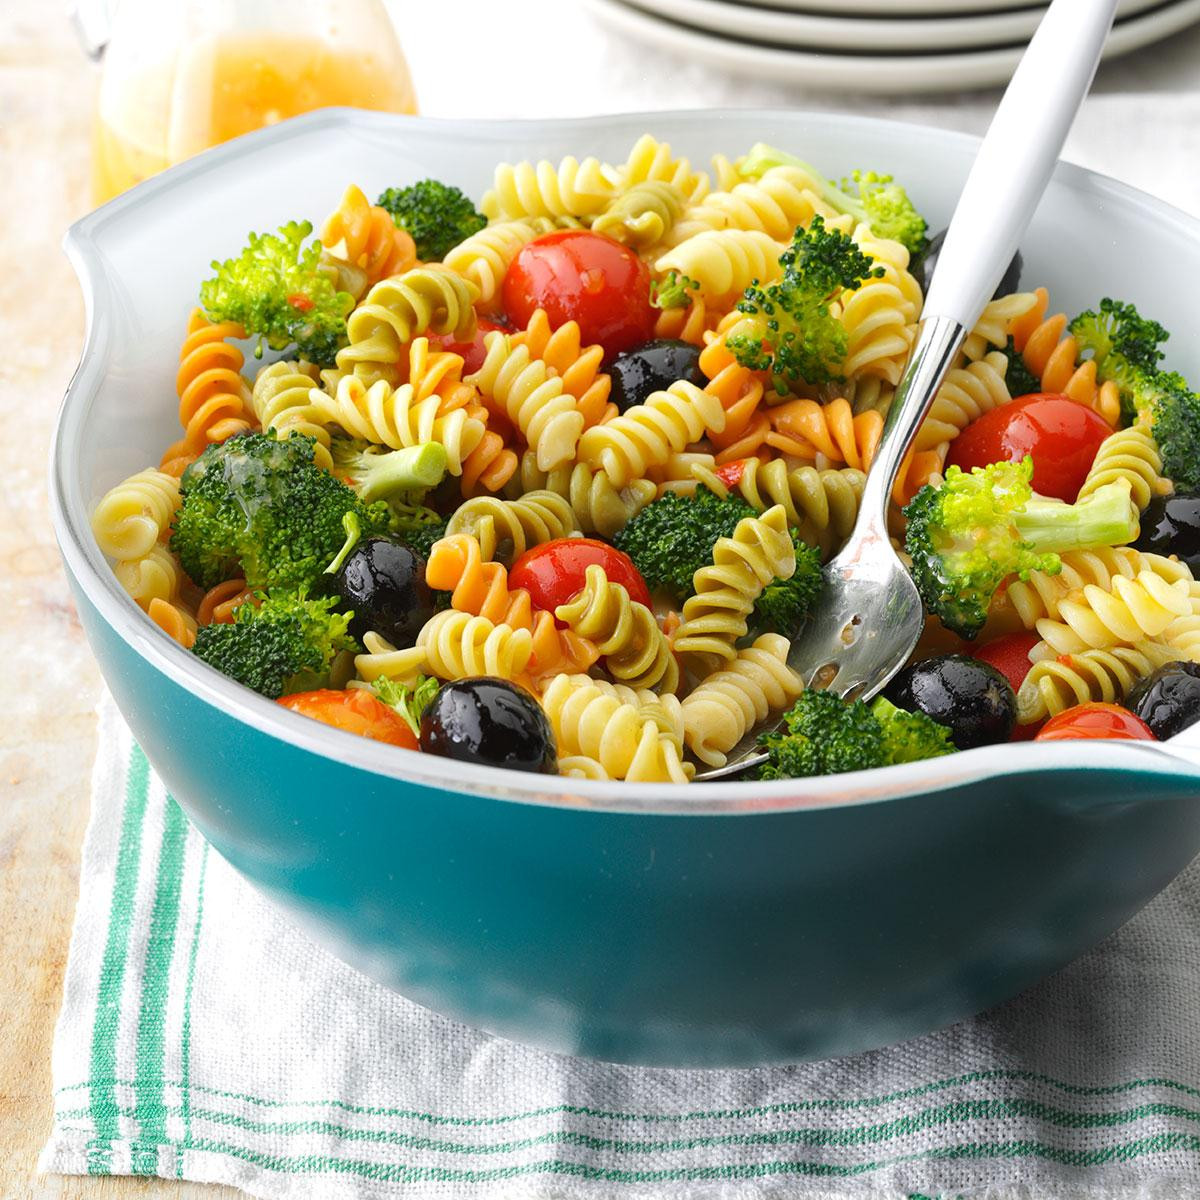 Taste Of Home Pasta Salad
 Colorful Spiral Pasta Salad Recipe